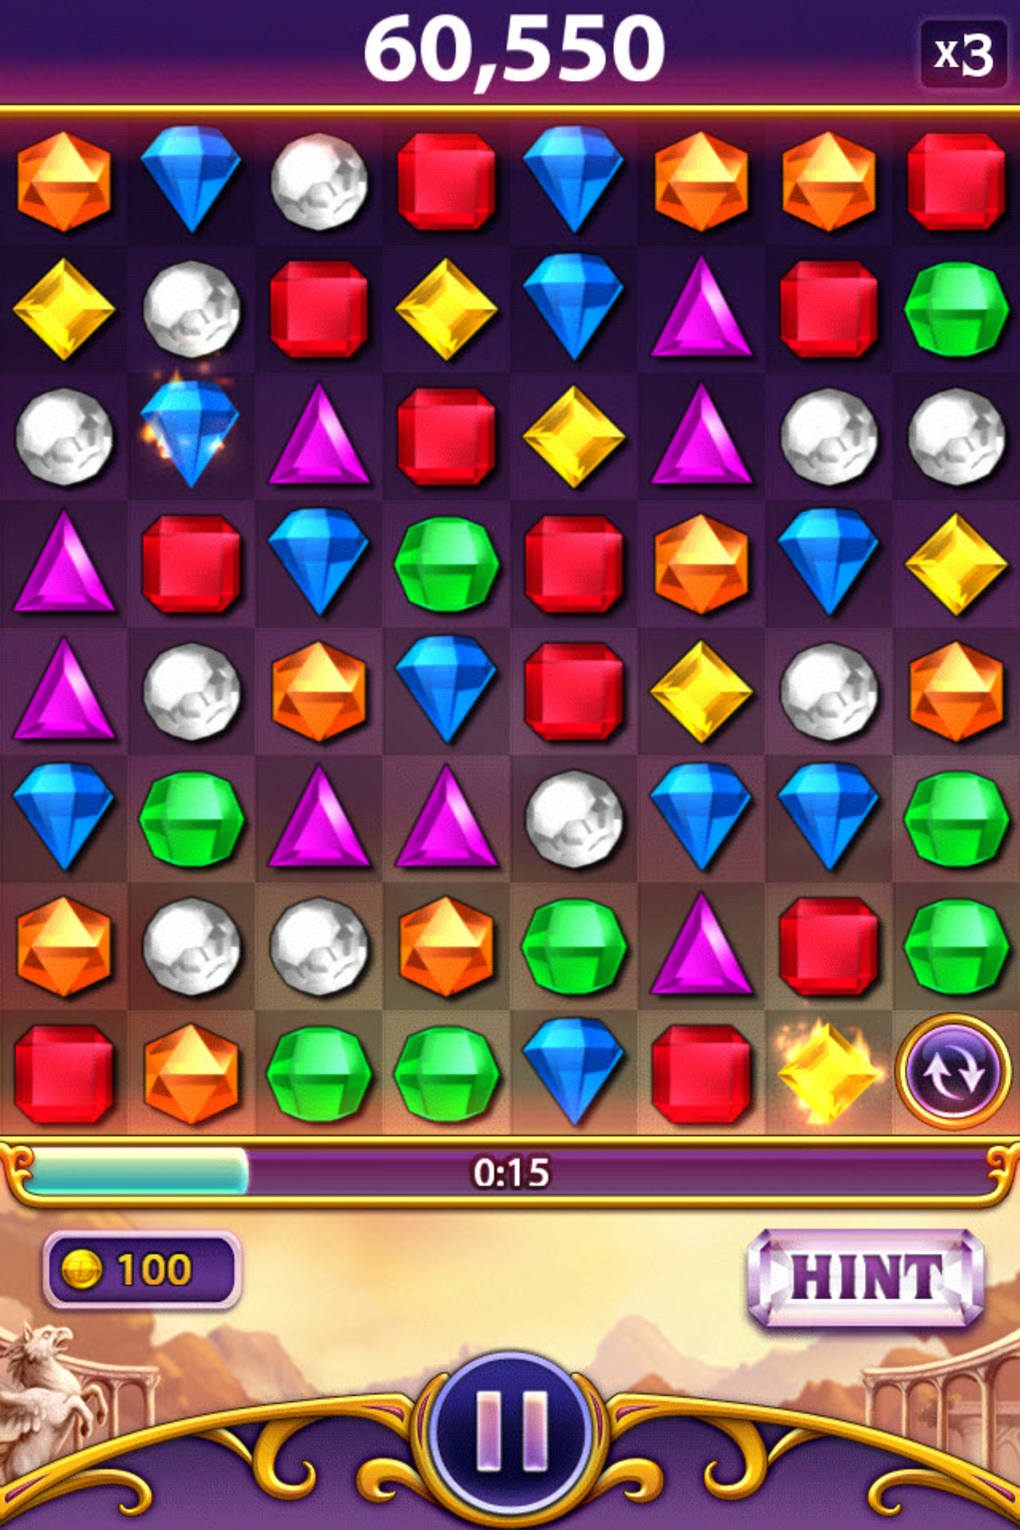 Bejeweled blitz free app